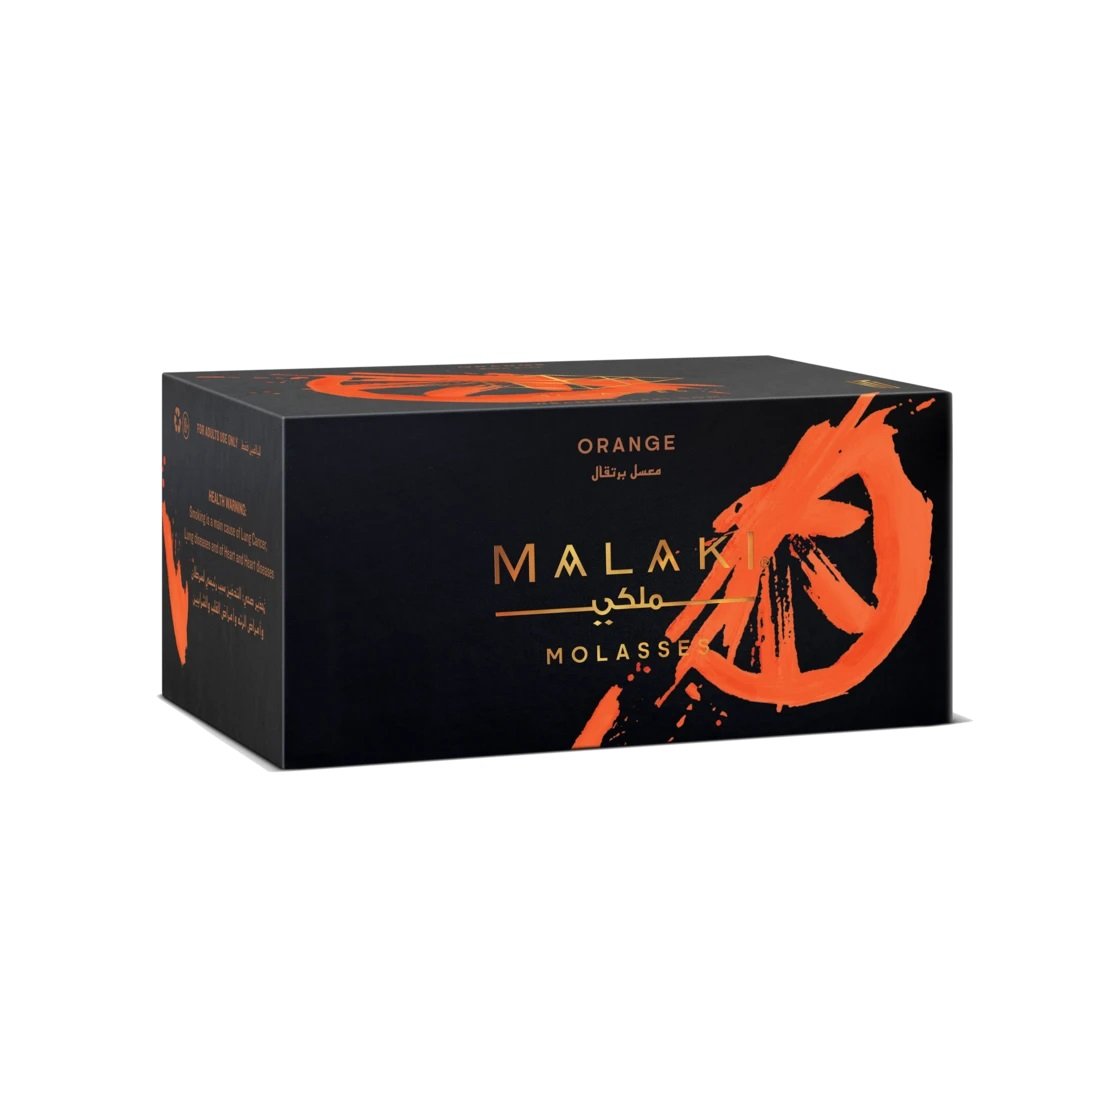 Malaki 200g Box Orange